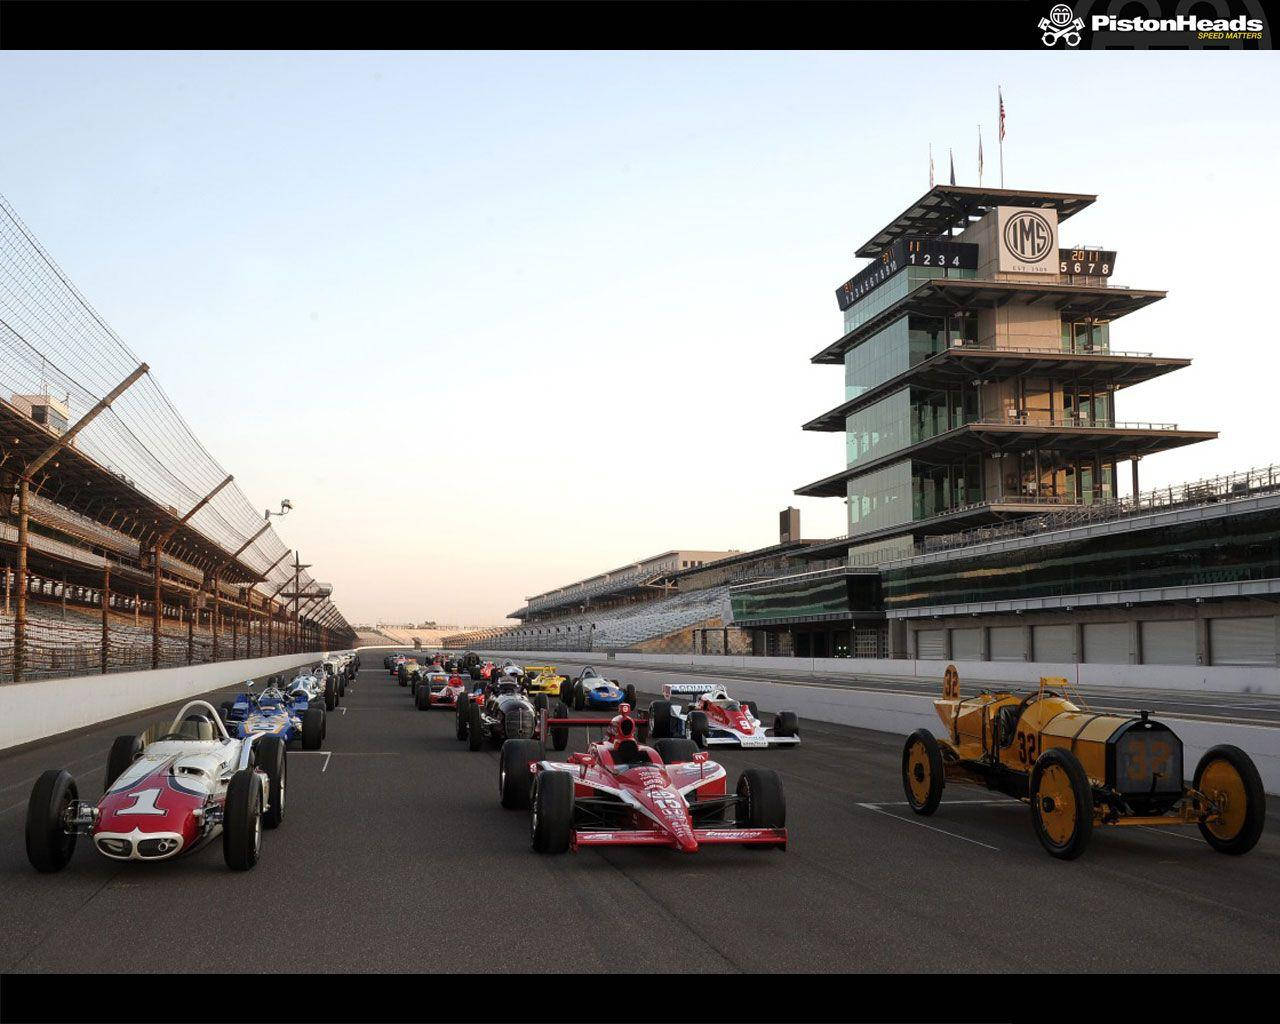 Classic Cars At Indianapolis 500